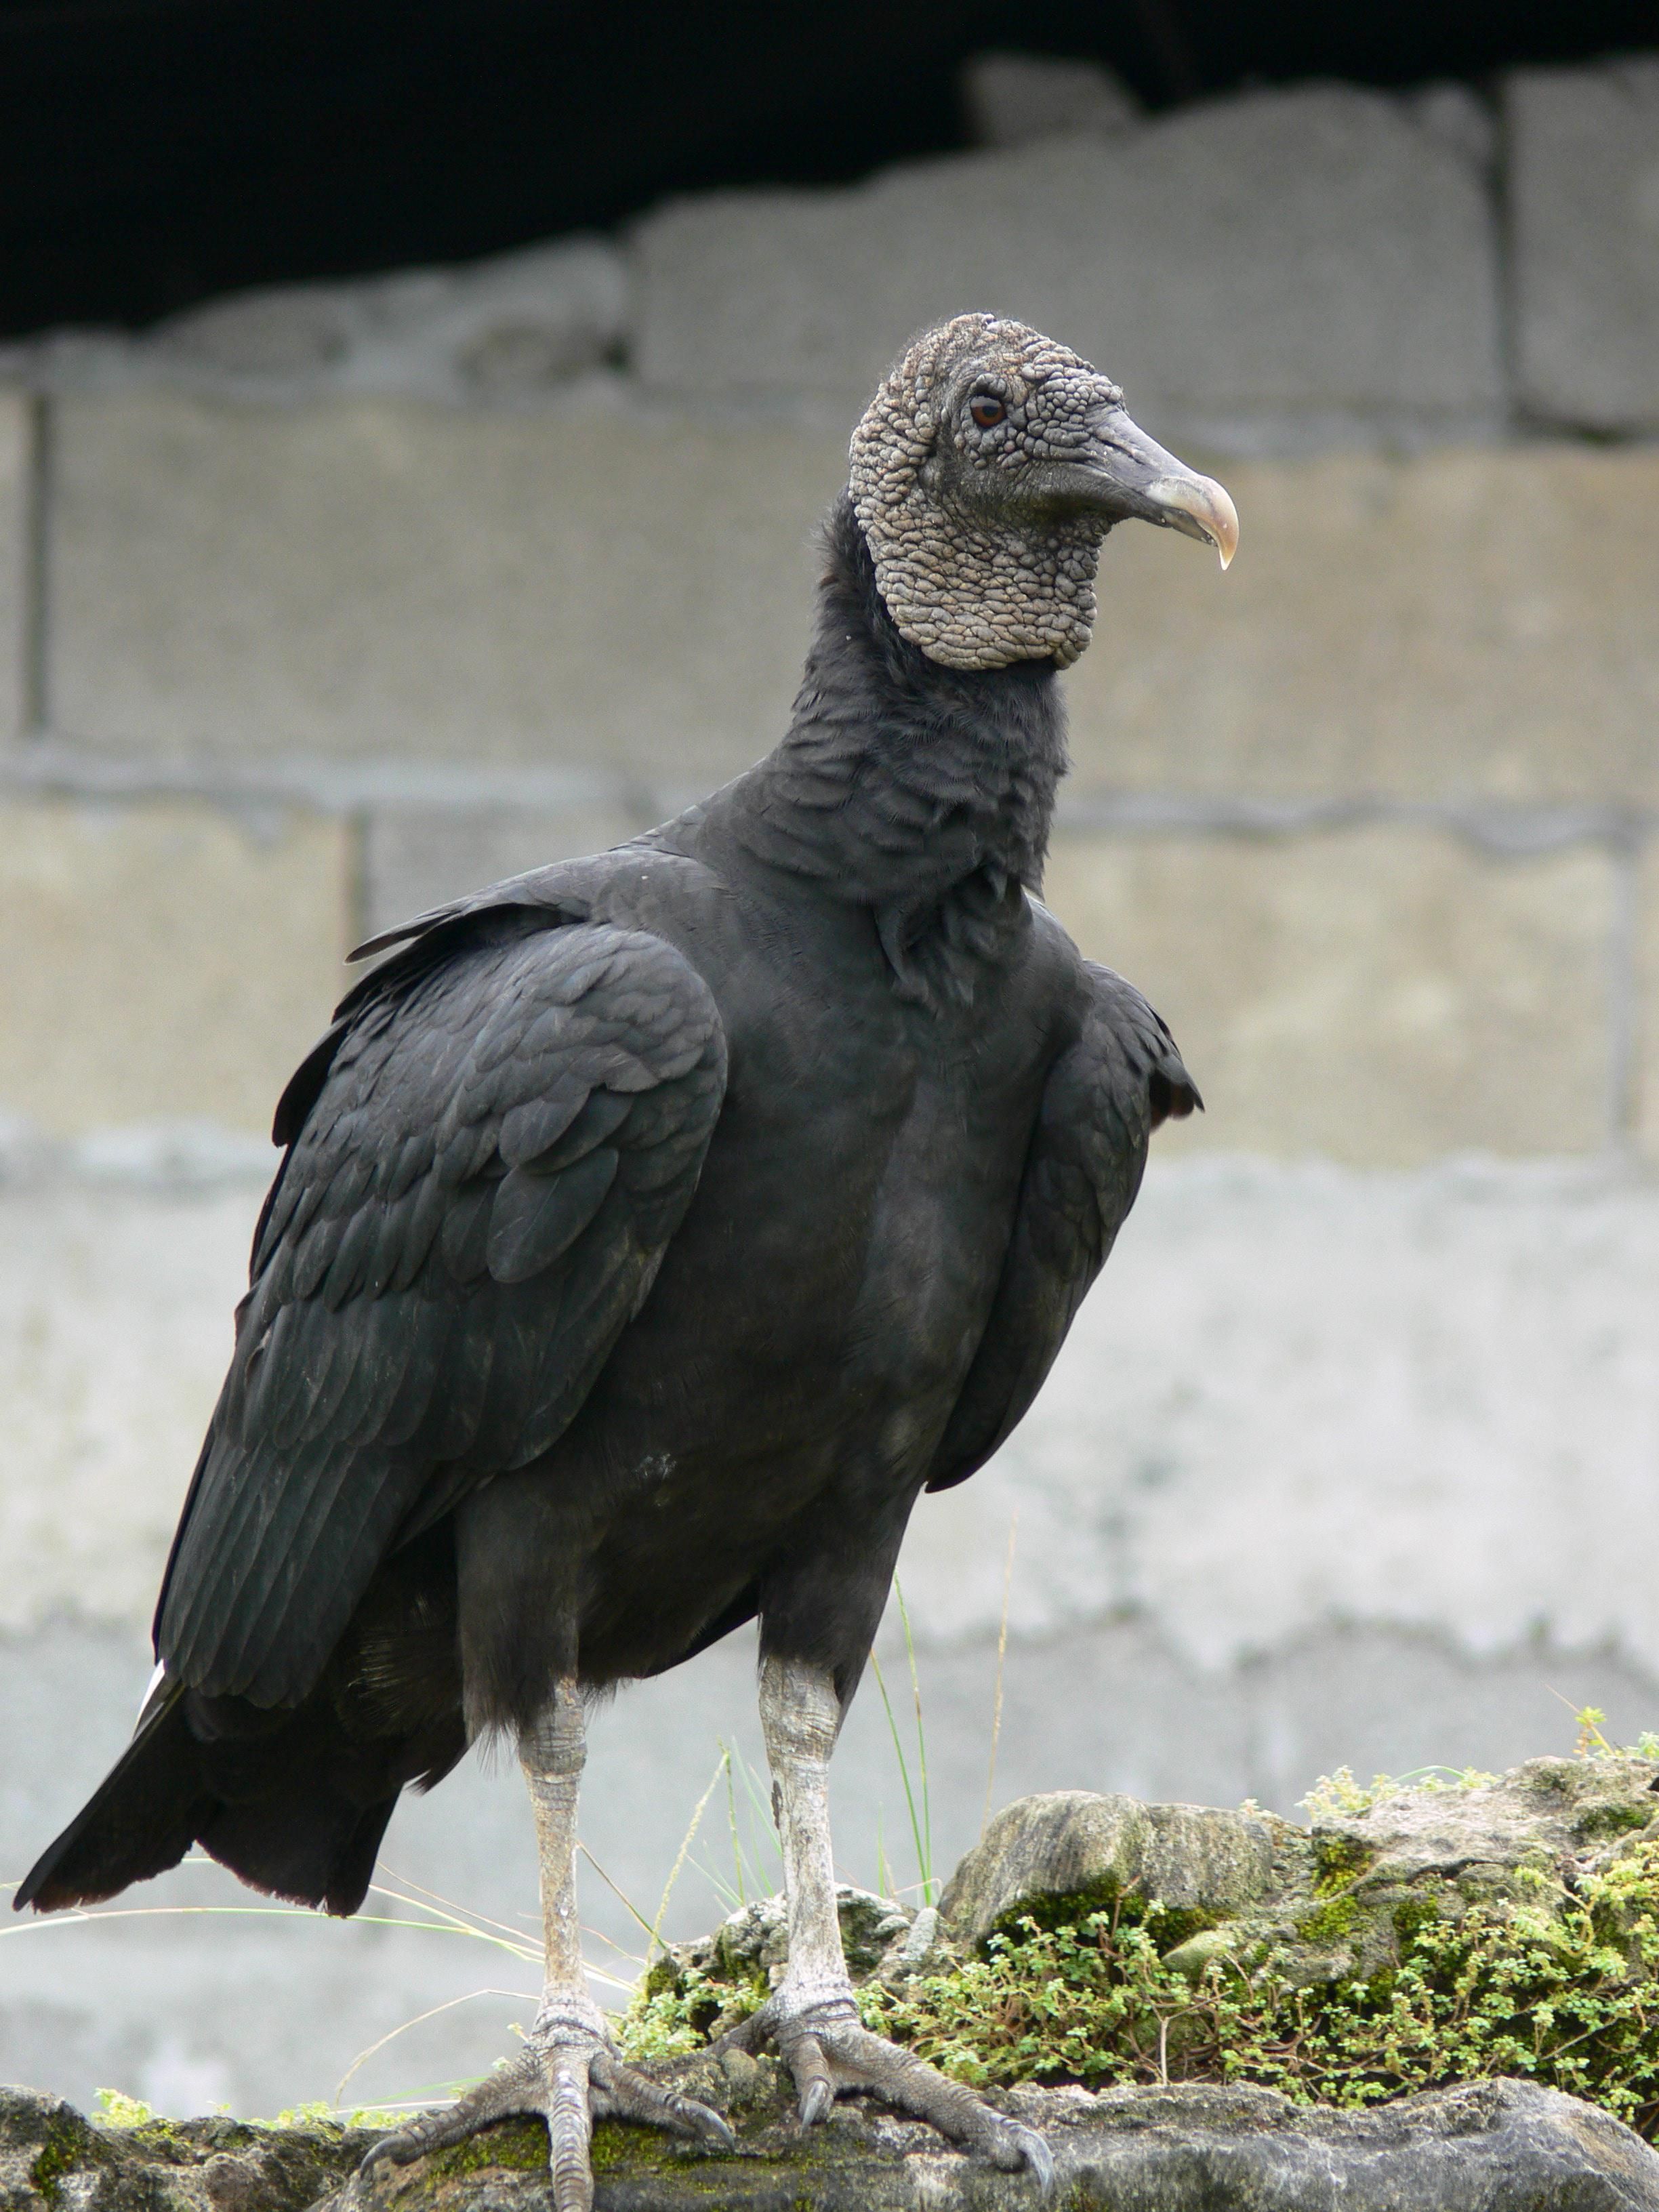 black-vulture-1amicgb.jpg